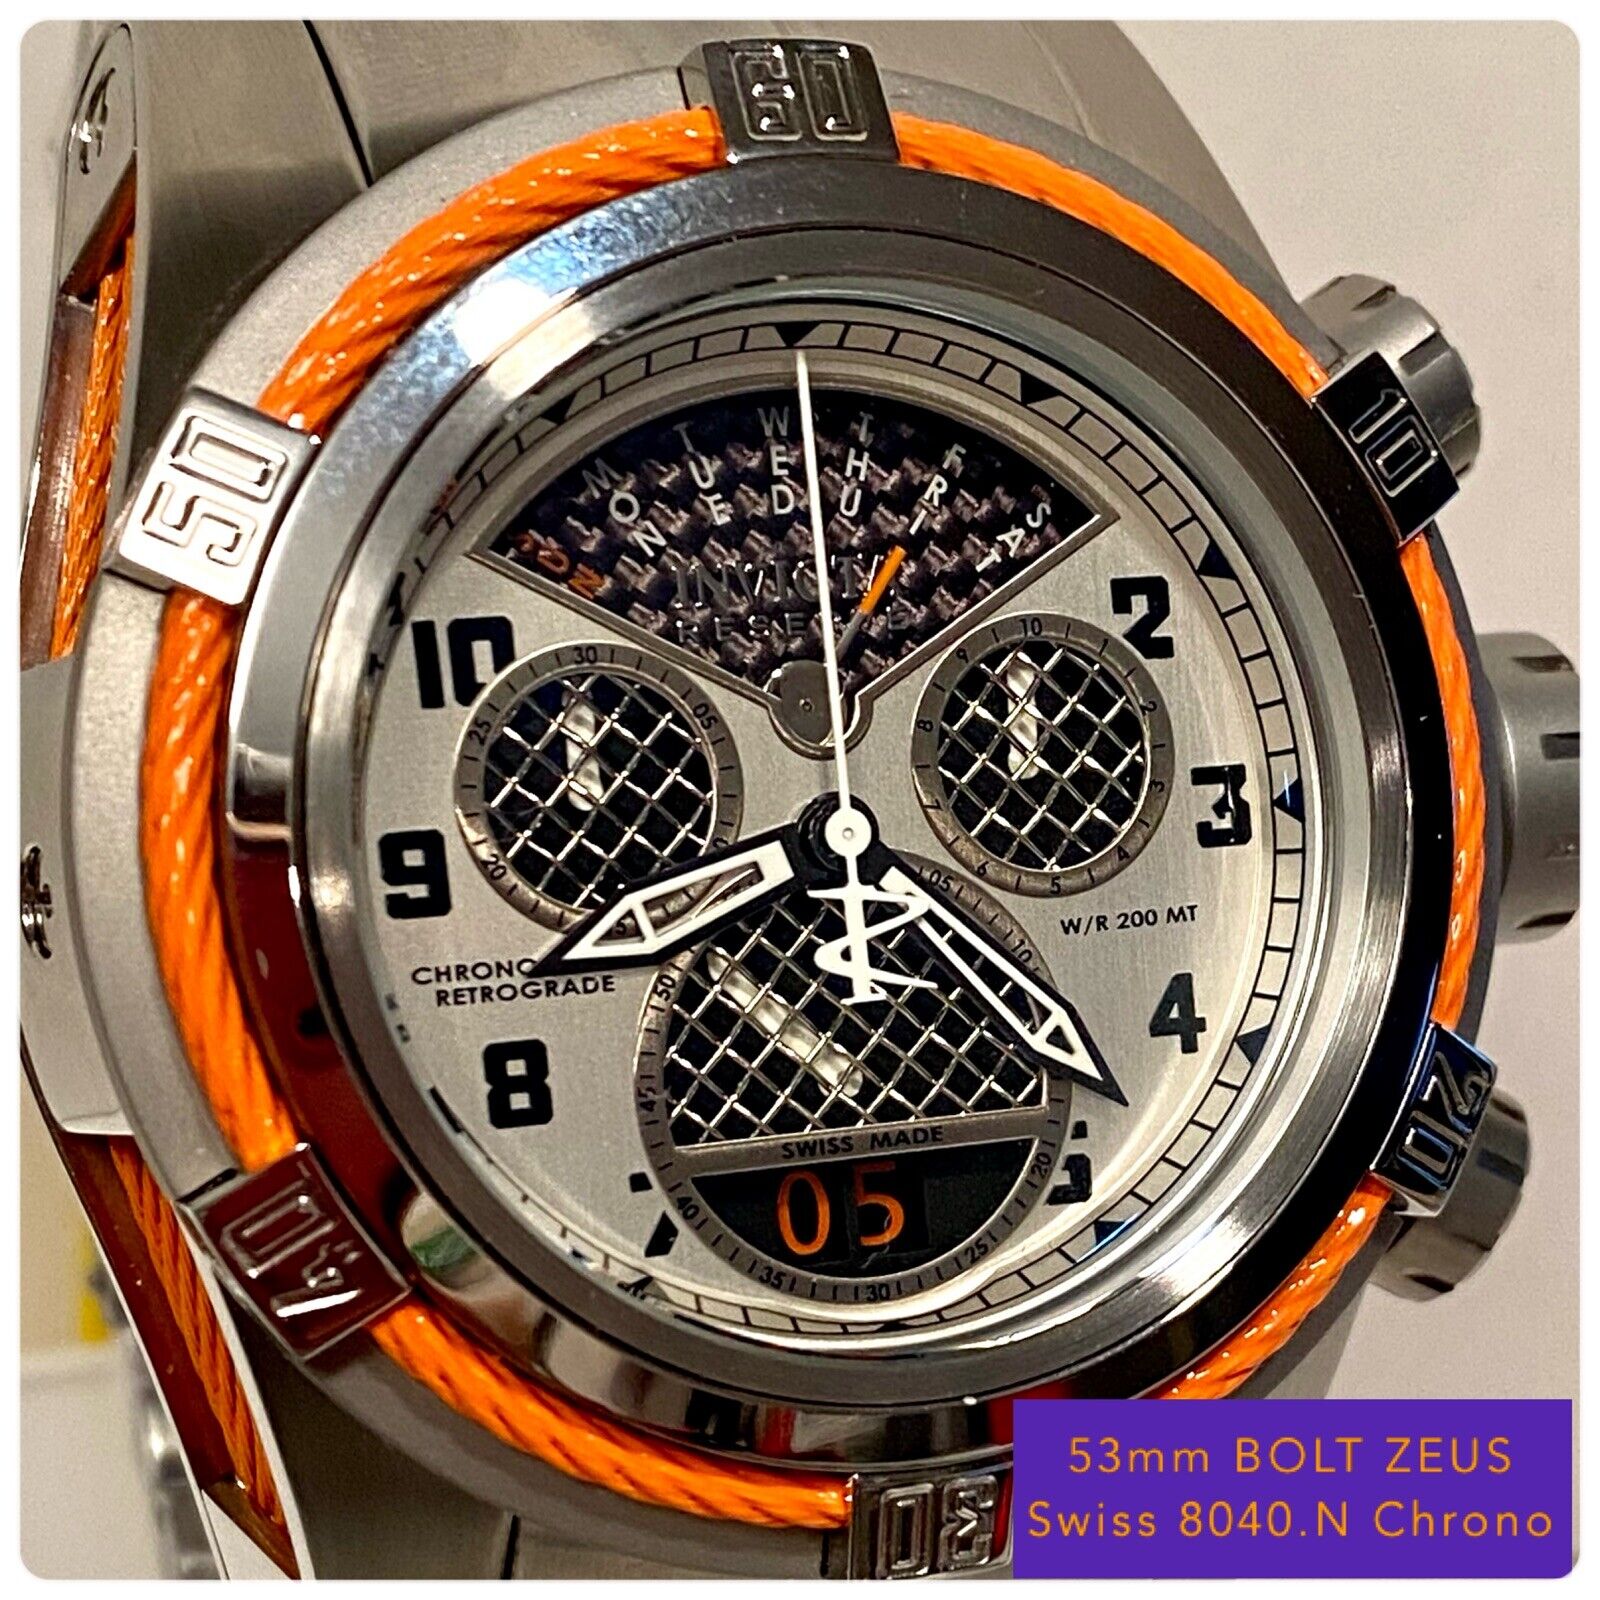 Invicta Bolt Zeus 53mm Orange/Silvertn Swiss 8040.N Chrono Bracelet Mens  Watch